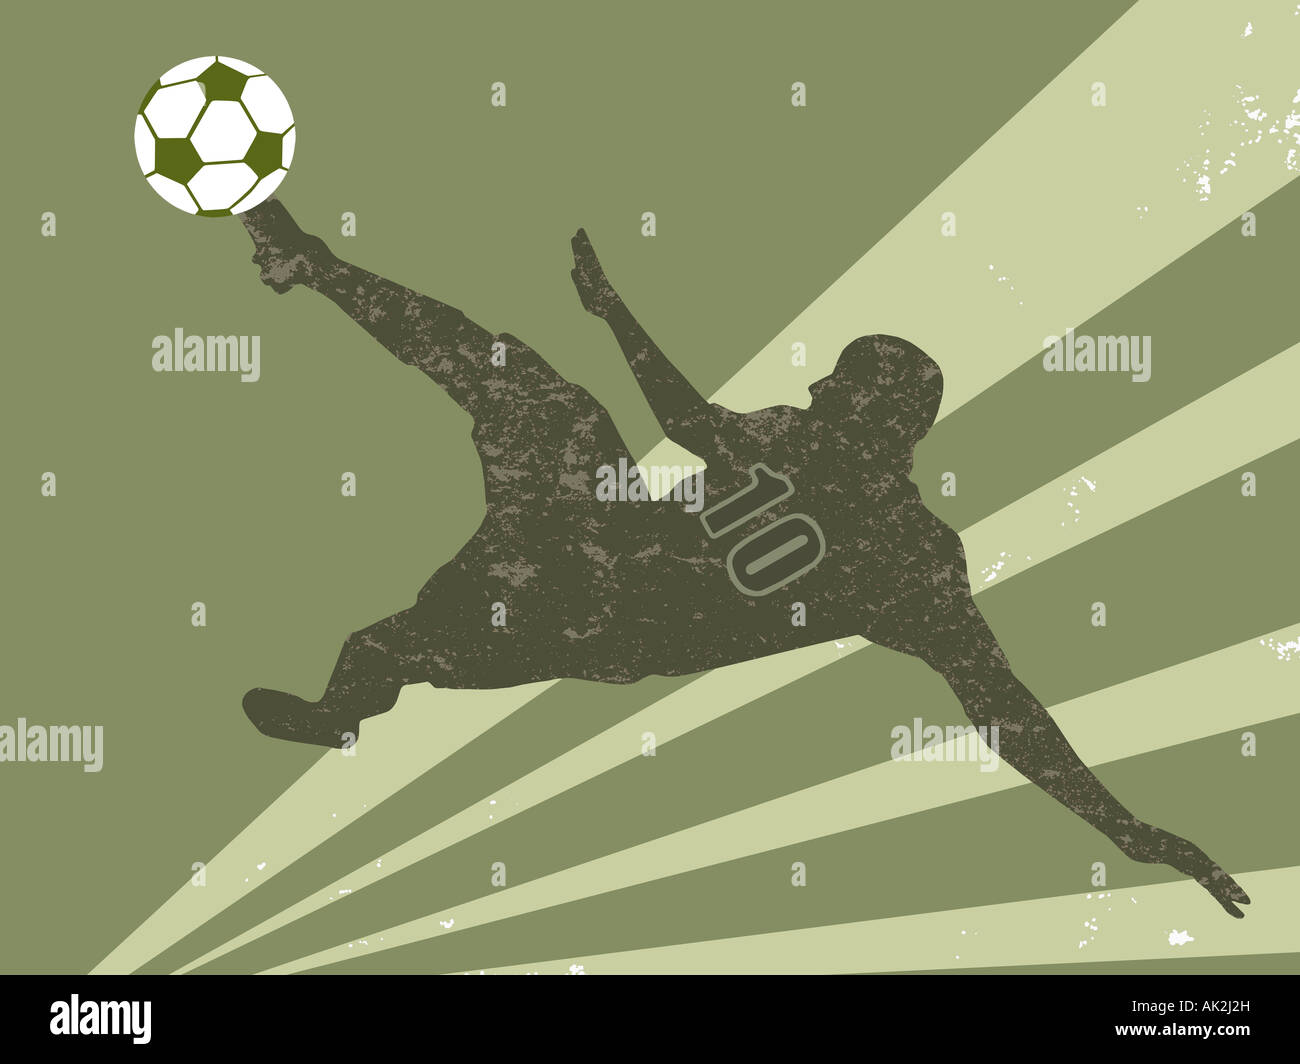 Footballer mid-air kicking soccer ball Stock Photo